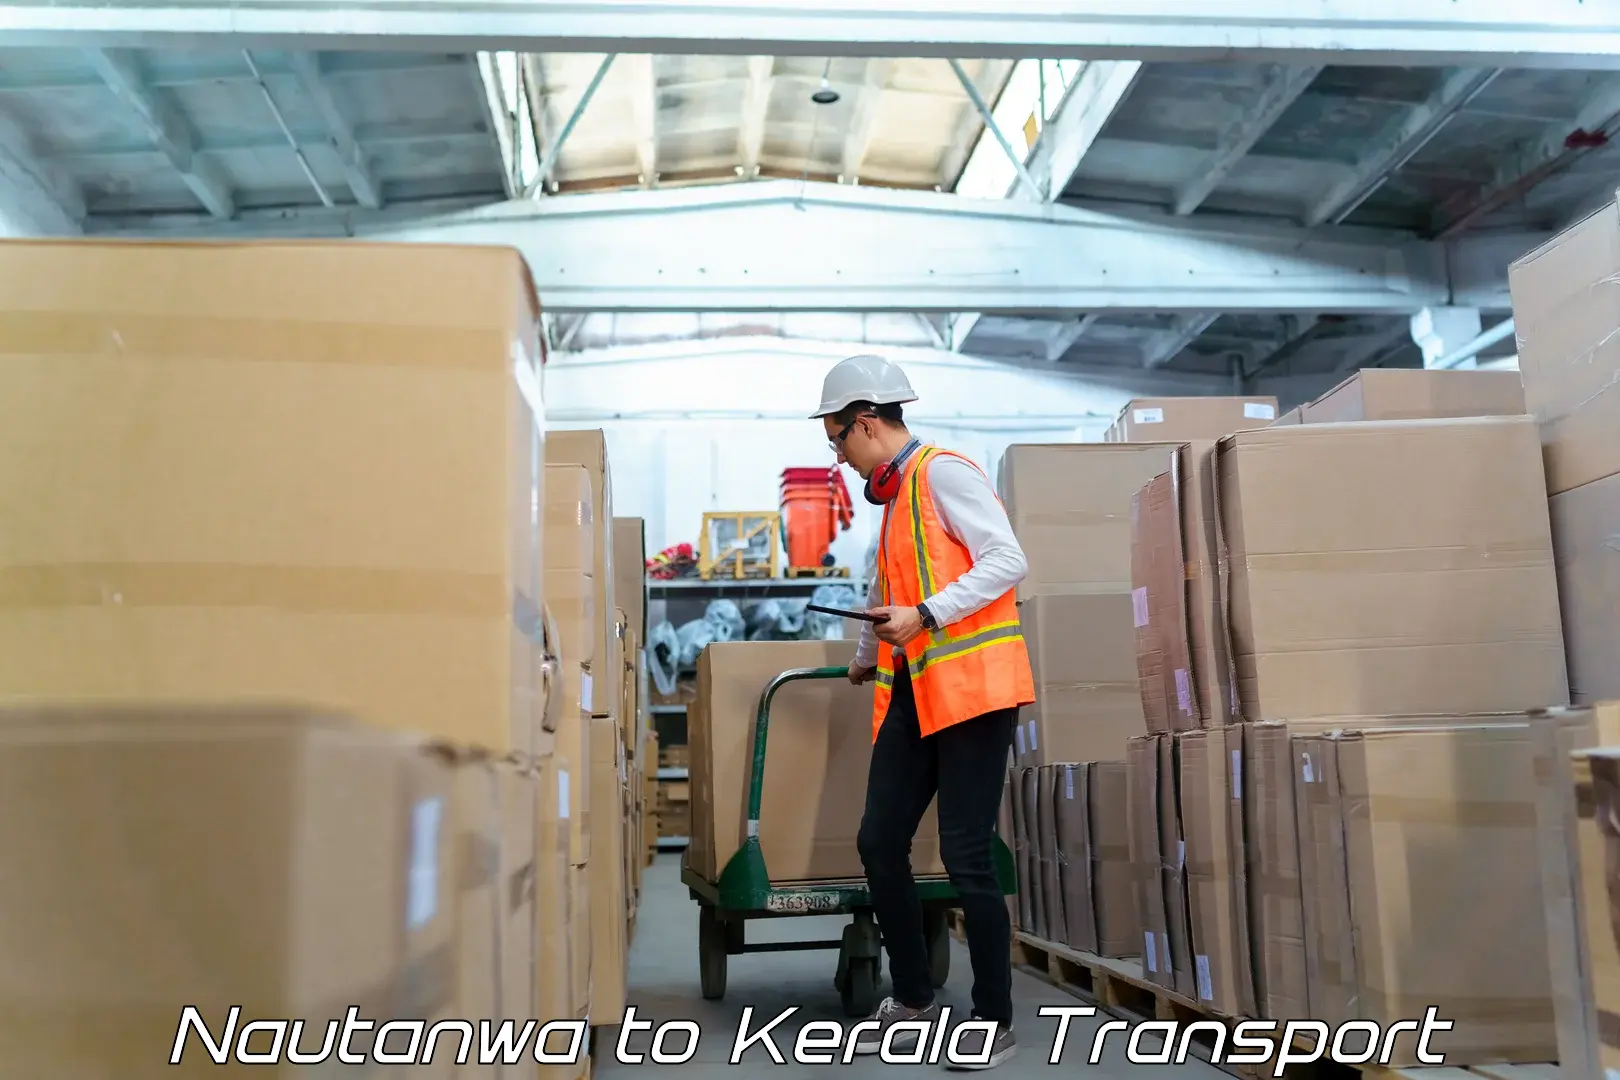 Container transport service Nautanwa to Kerala